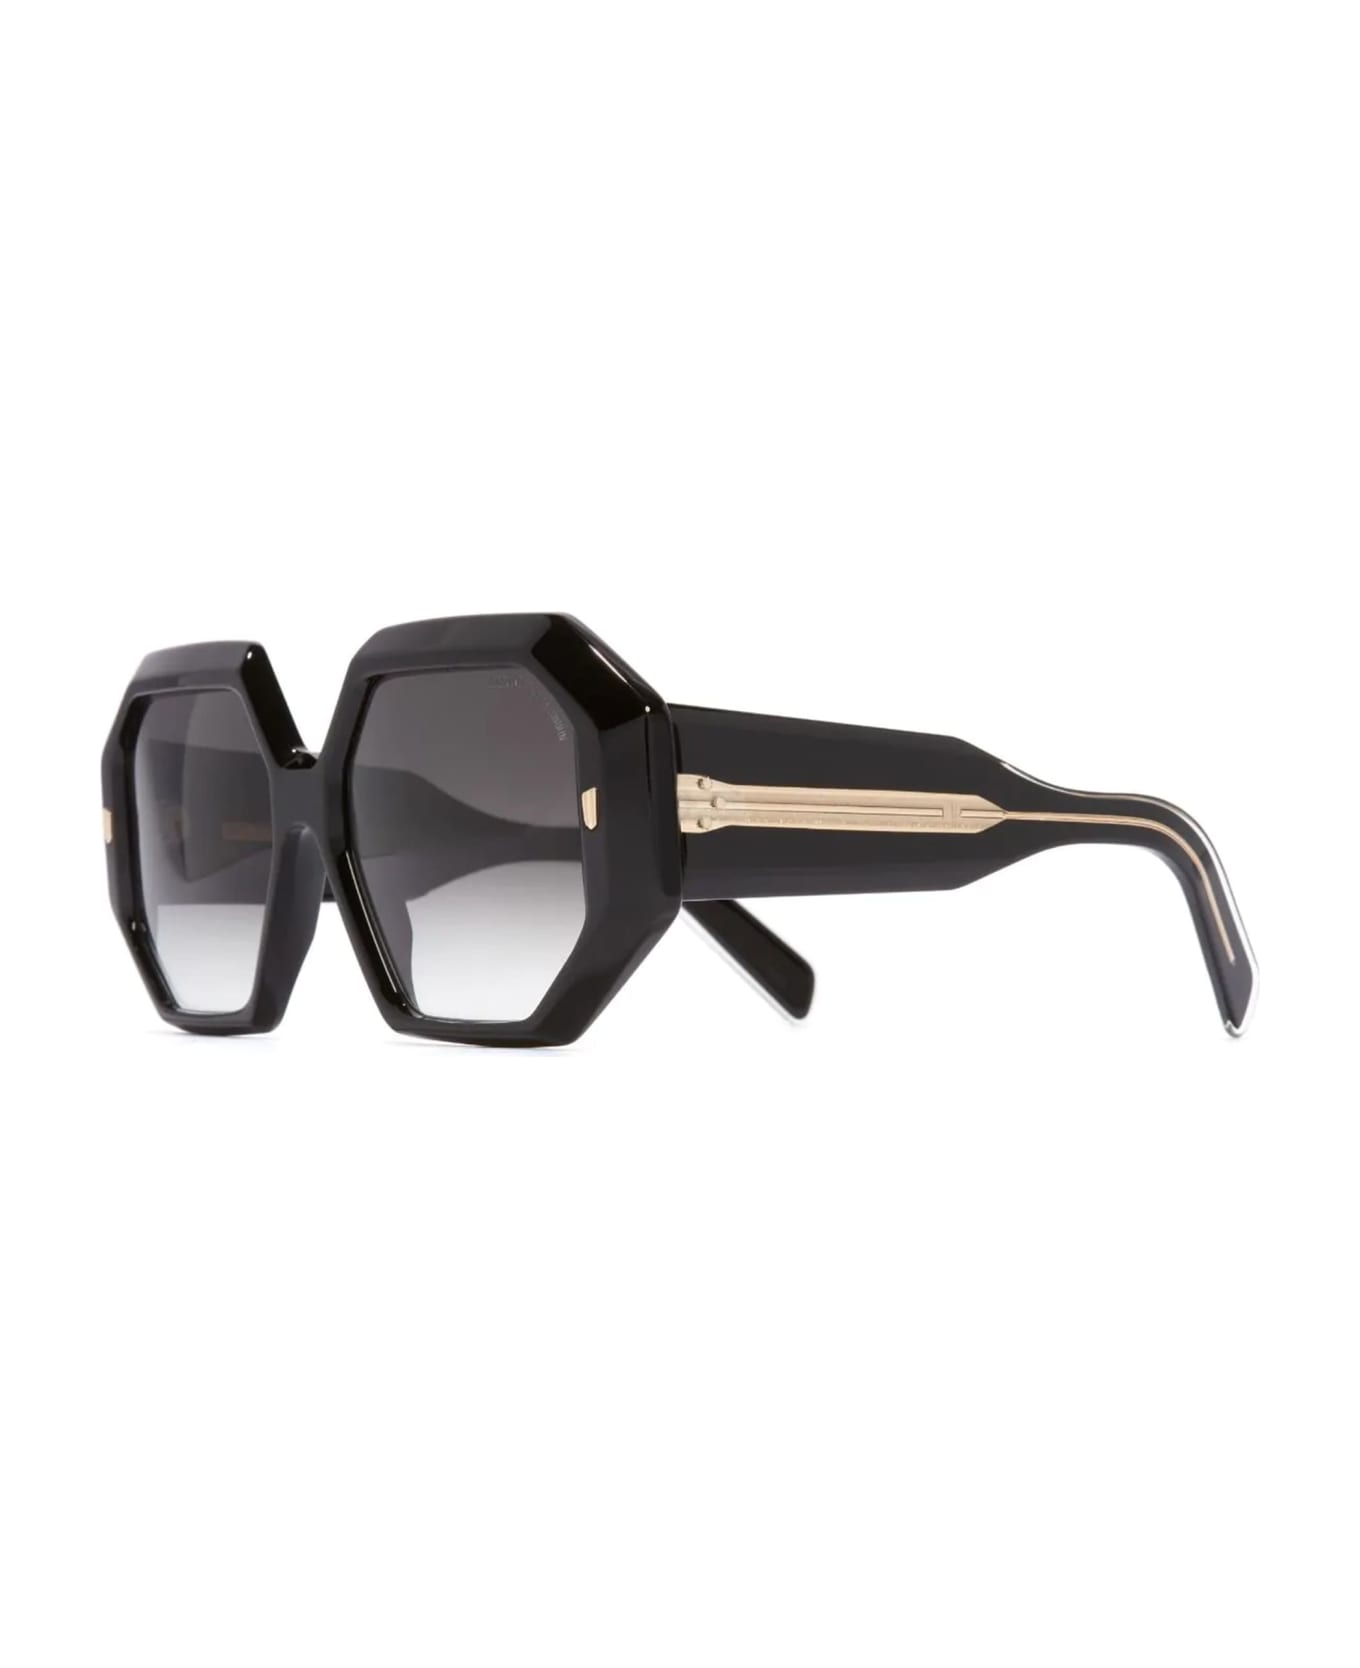 Cutler and Gross 9324 / Black Sunglasses - Black